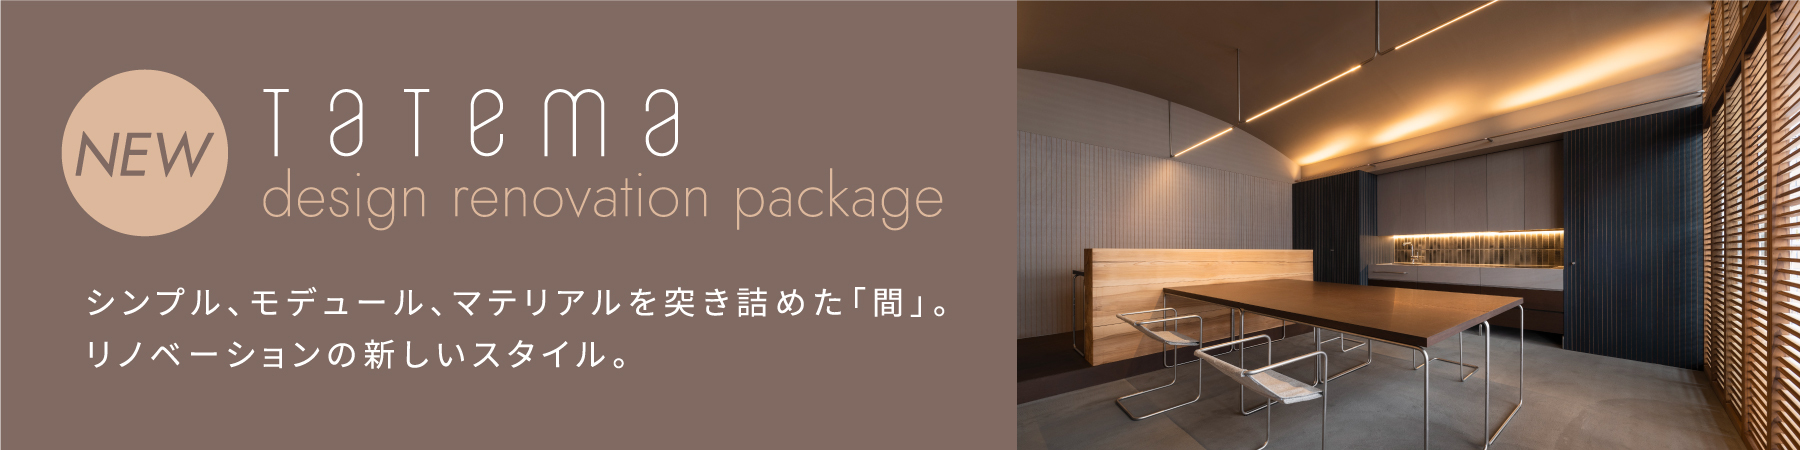 NEW tatema design renovation package シンプル、モデュール、マテリアルを突き詰めた「間」。リノベーションの新しいスタイル